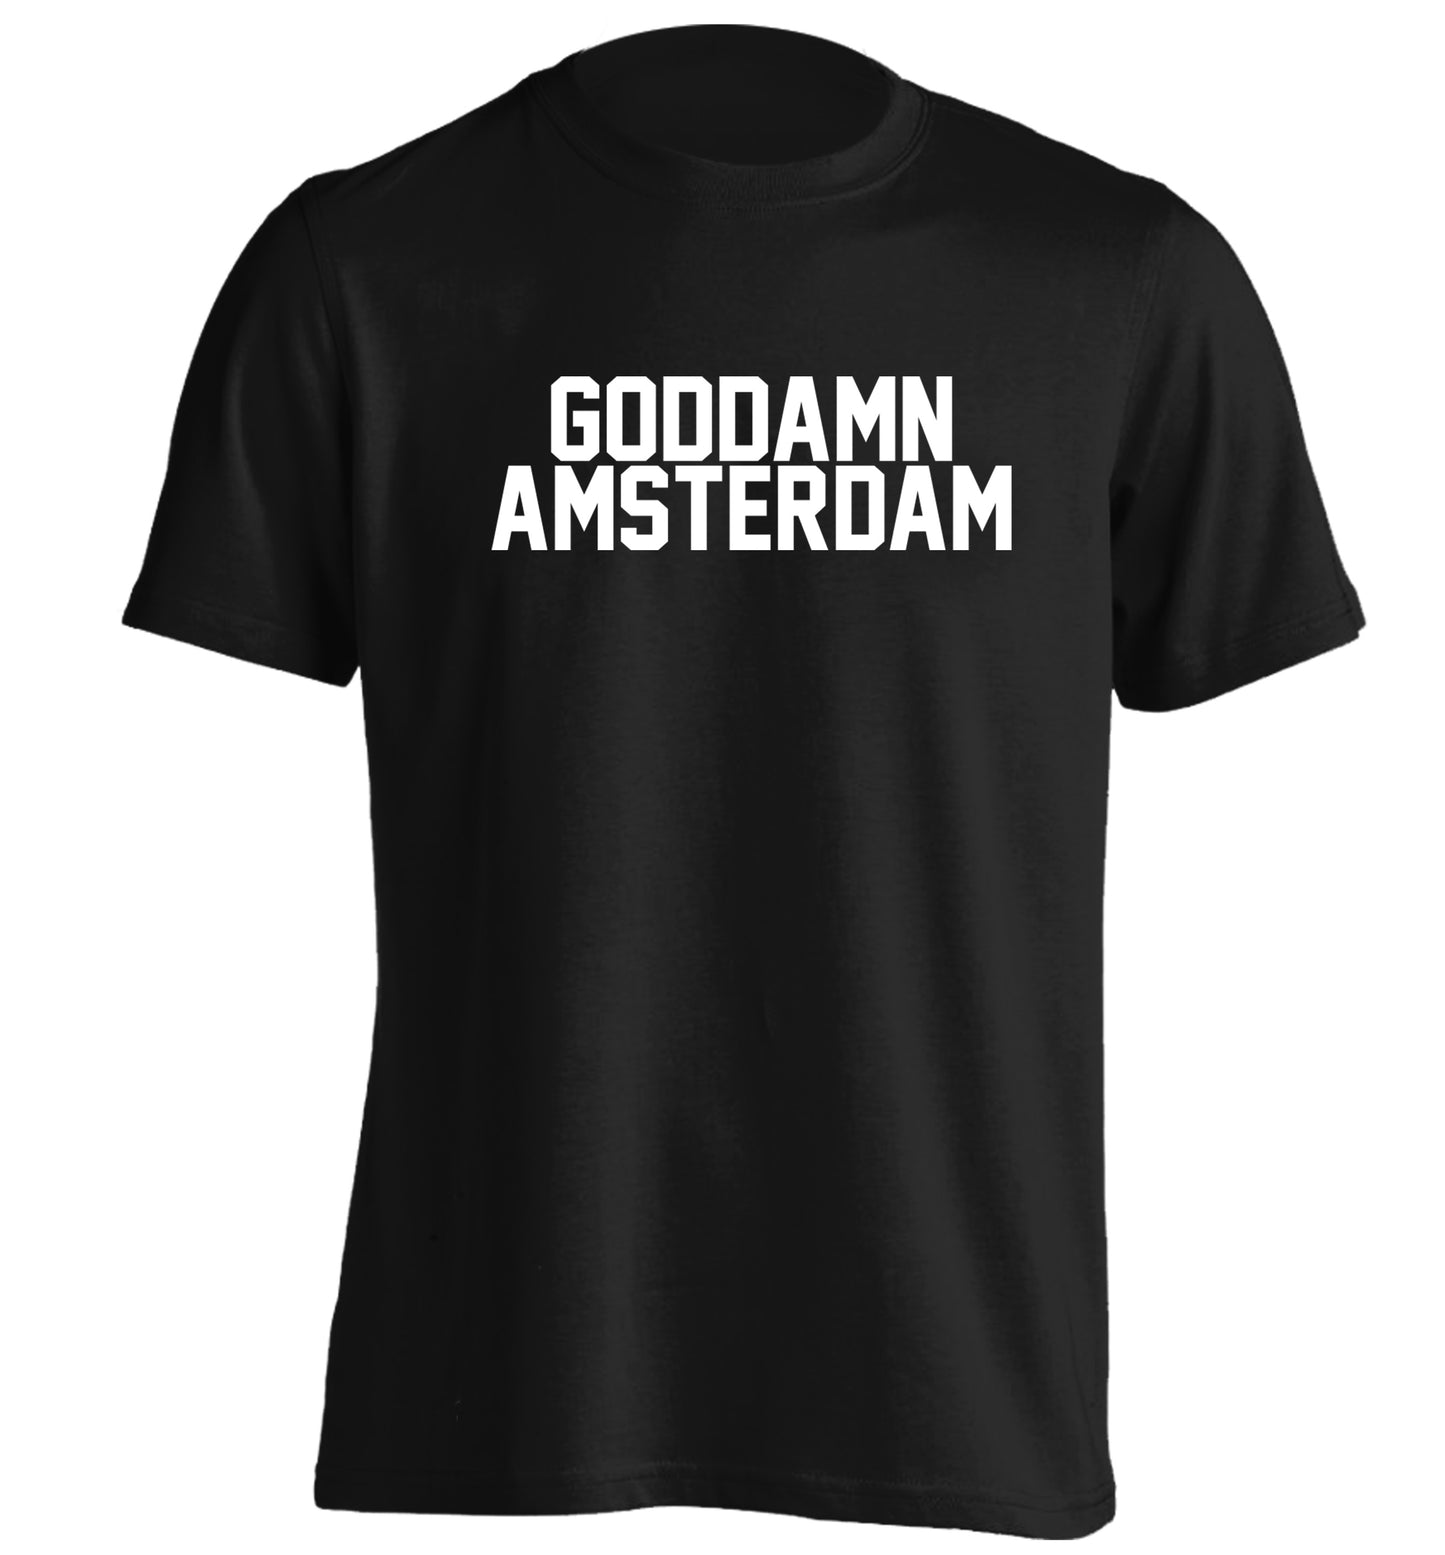 Goddamn Amsterdam adults unisex black Tshirt 2XL